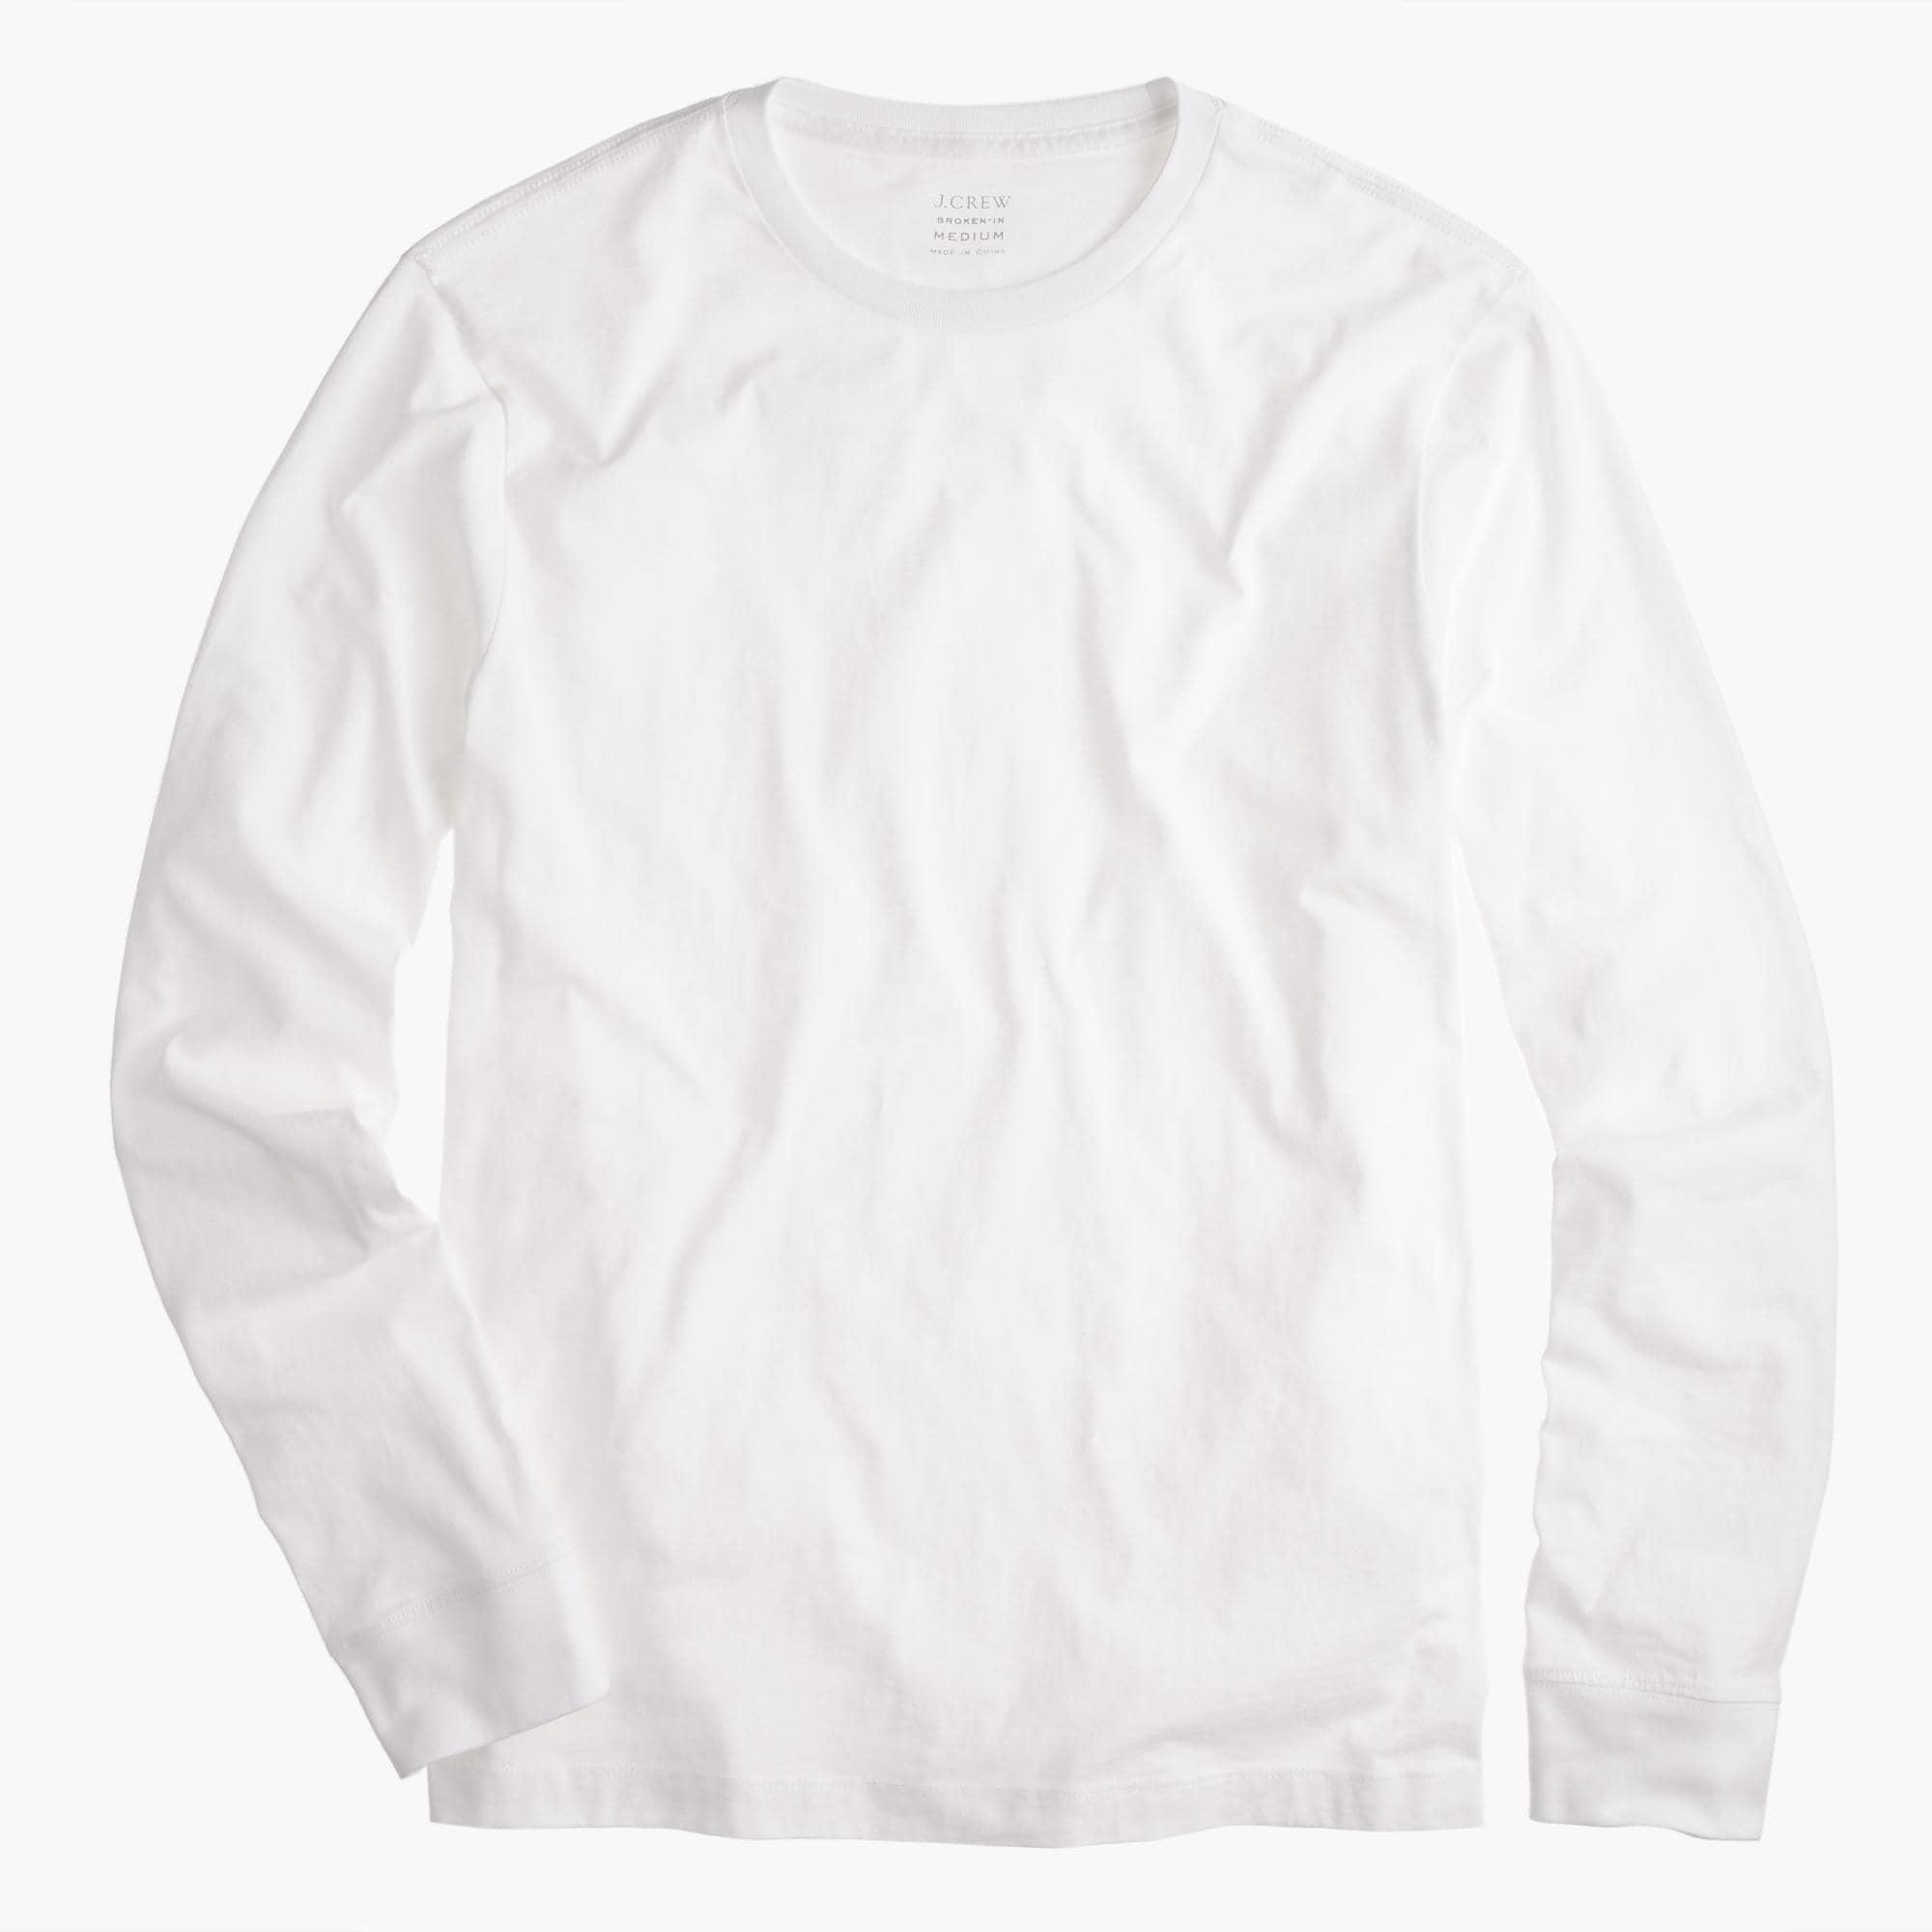 J.Crew Slim-Fit Long-Sleeved Cotton T-Shirt in White for Men - Lyst